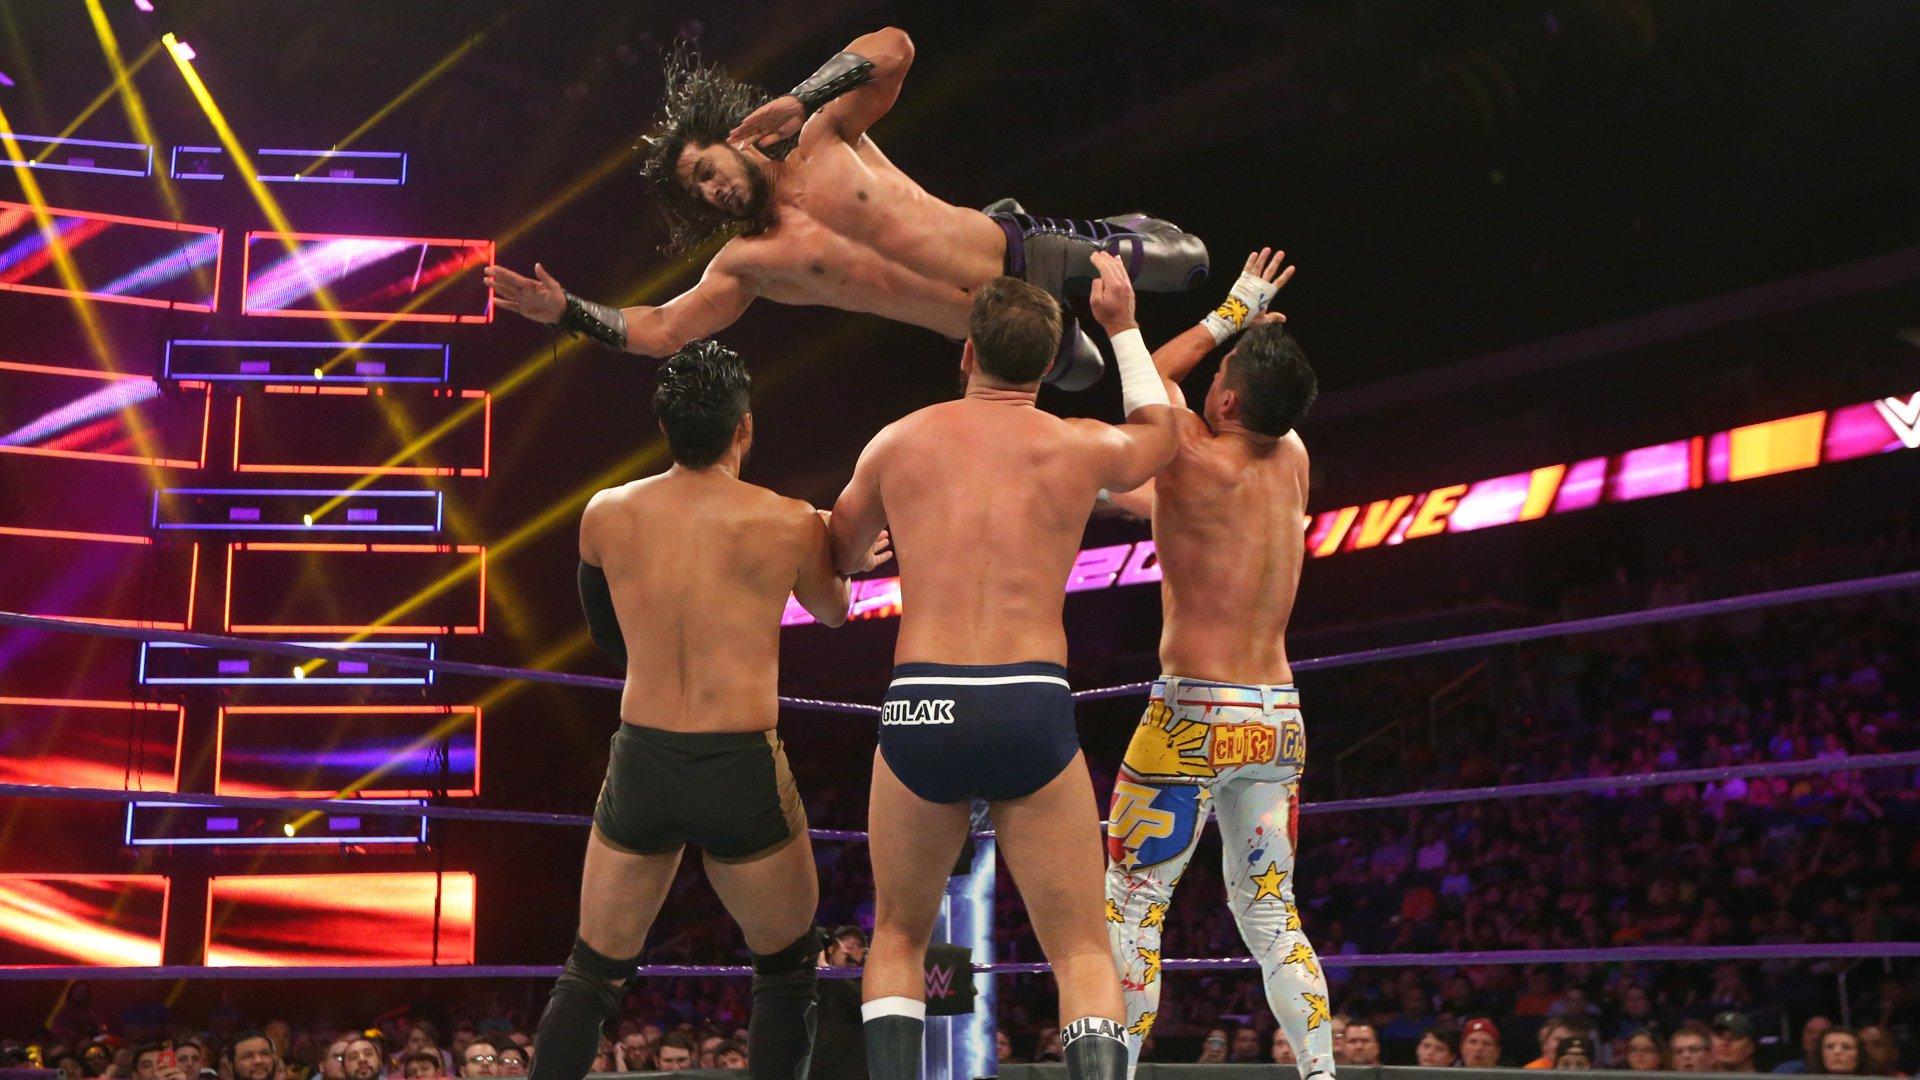 Mustafa Ali vs. TJP vs. Hideo Itami vs. Drew Gulak: WWE 205 Live